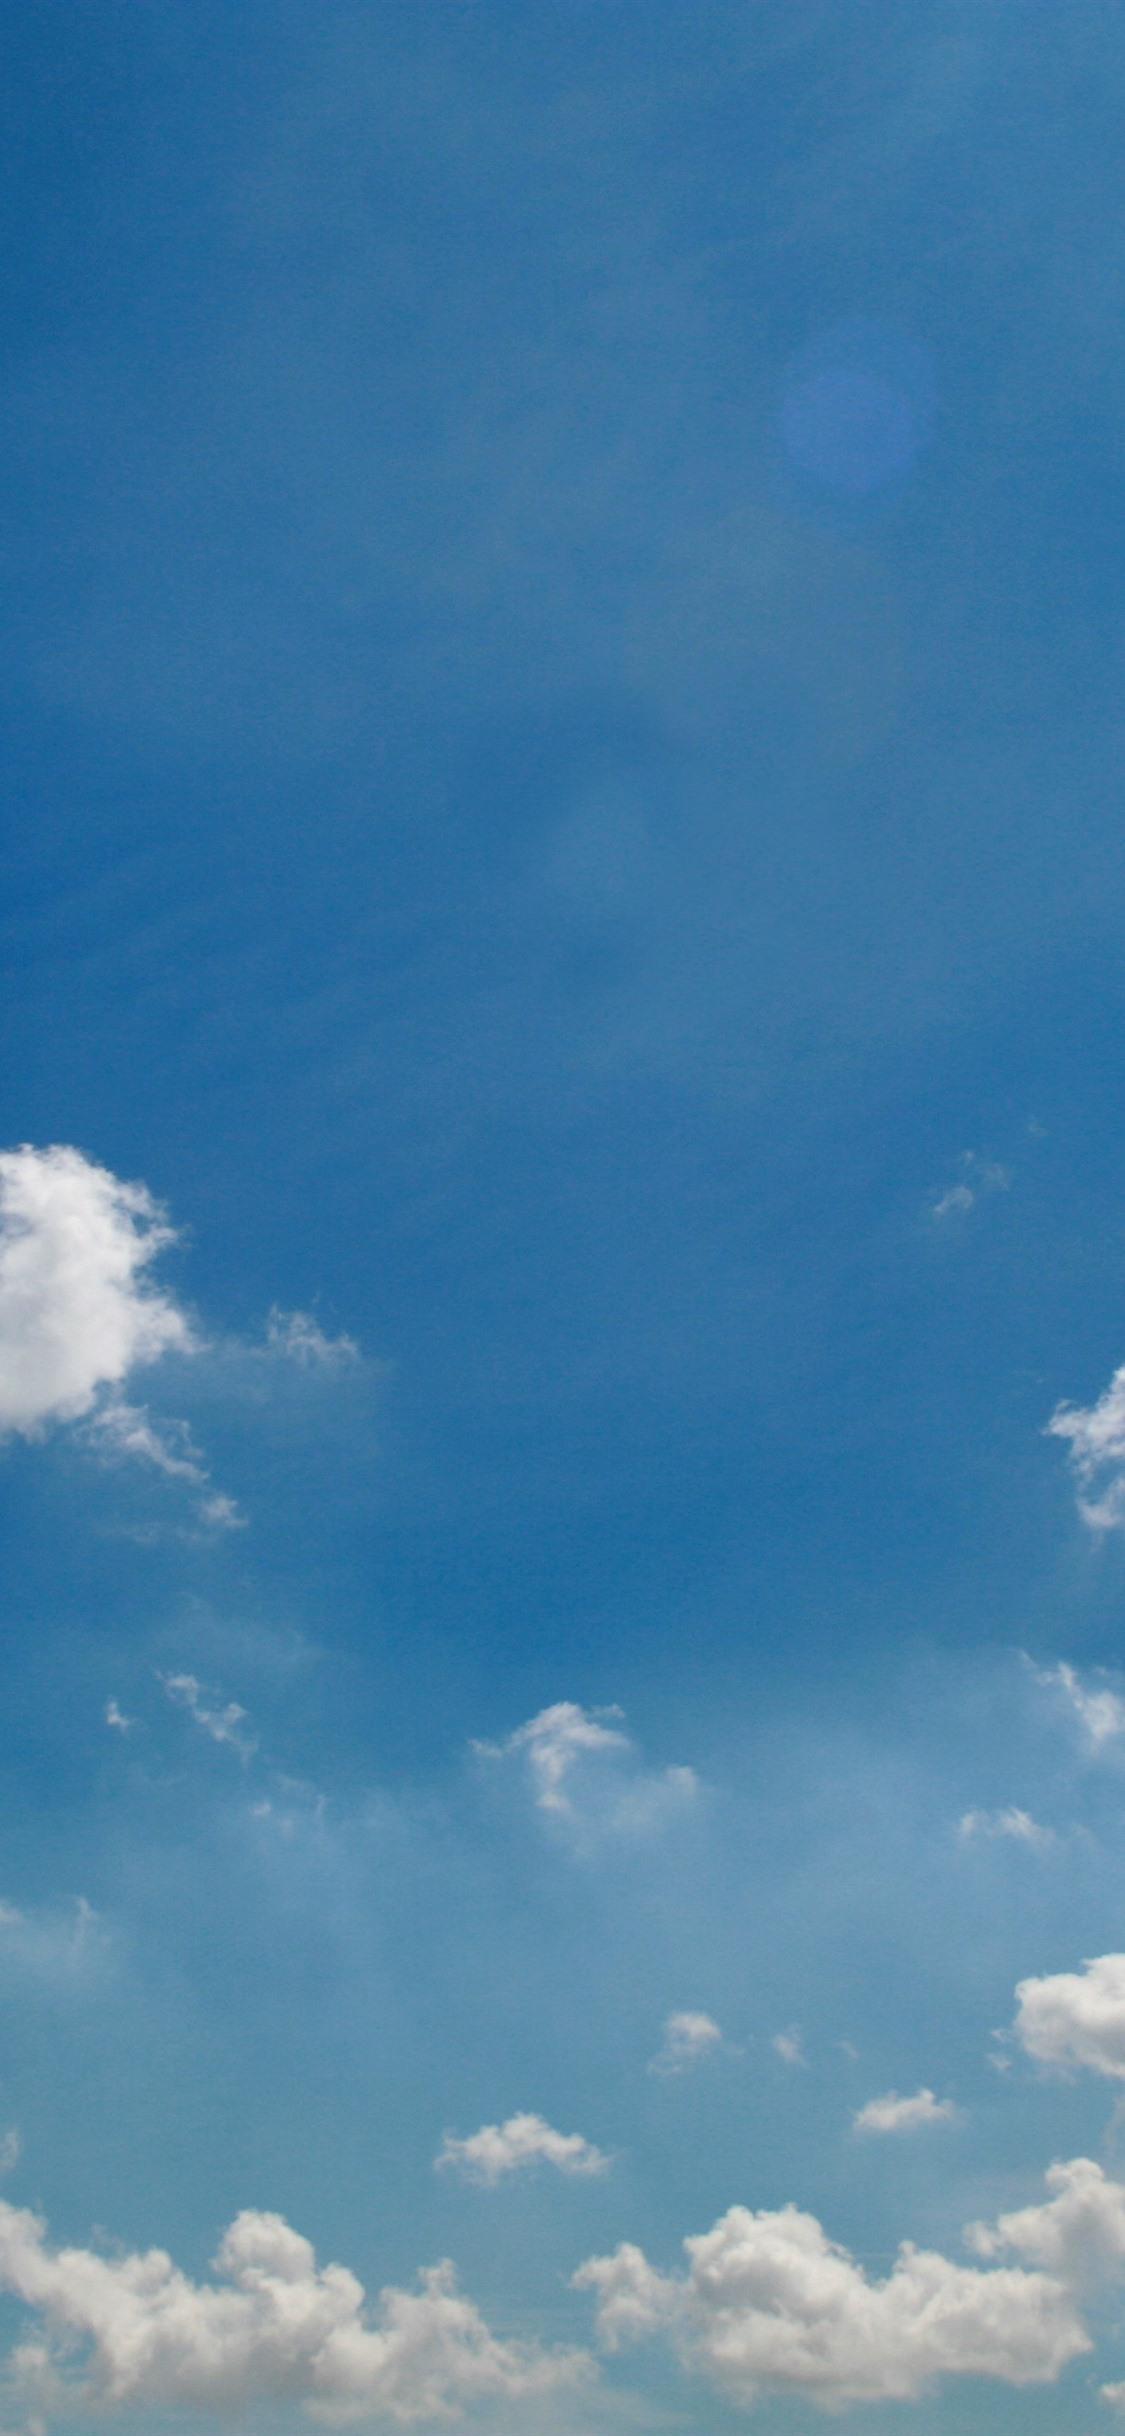 Blue sky, white clouds, nature landscape 1125x2436 iPhone XS